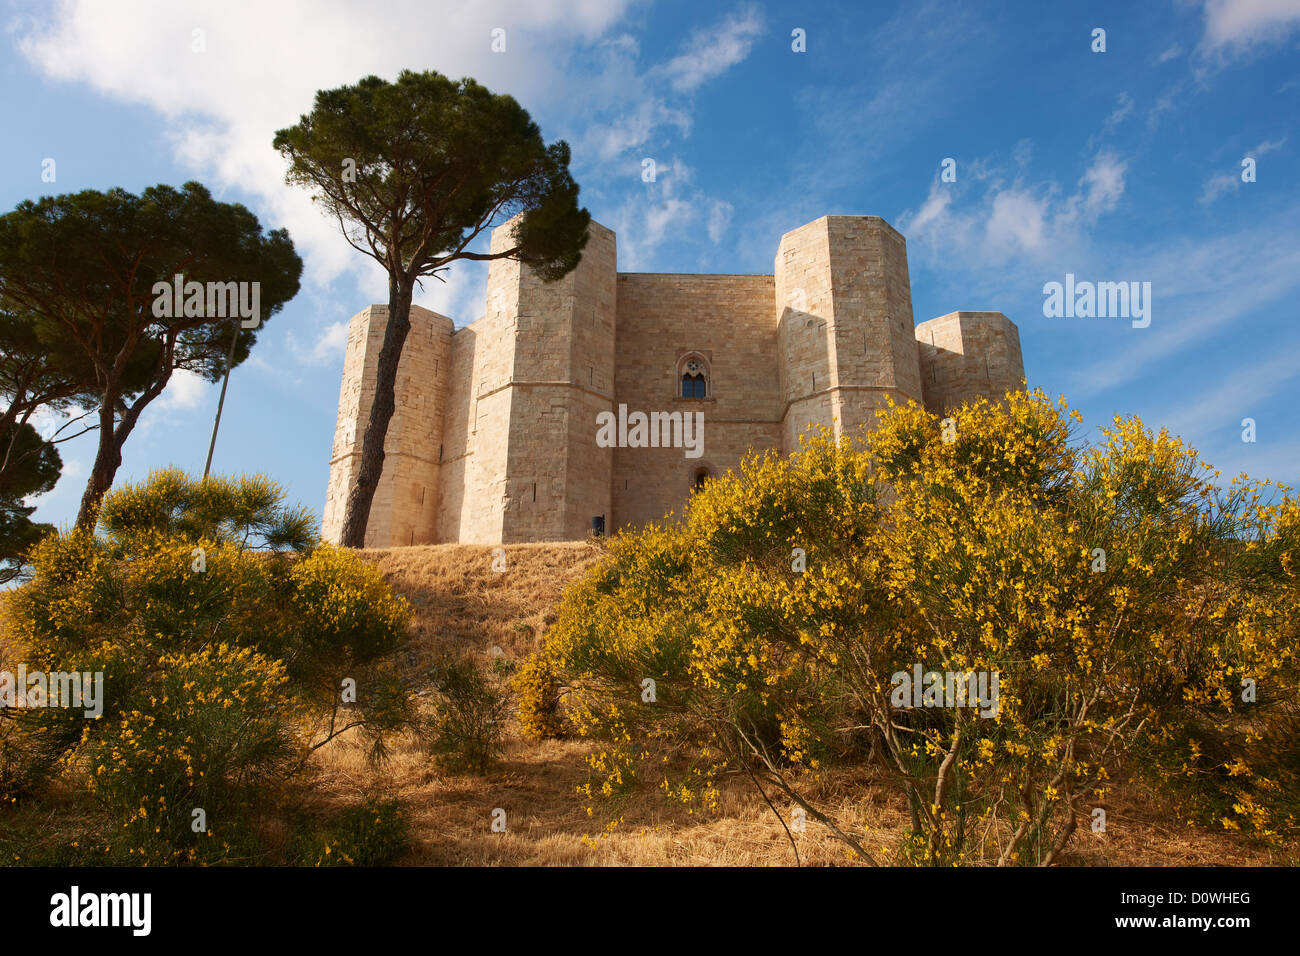 The medieval castle Castel del Monte (Castle of the Mount)  Apulia, Italy Stock Photo